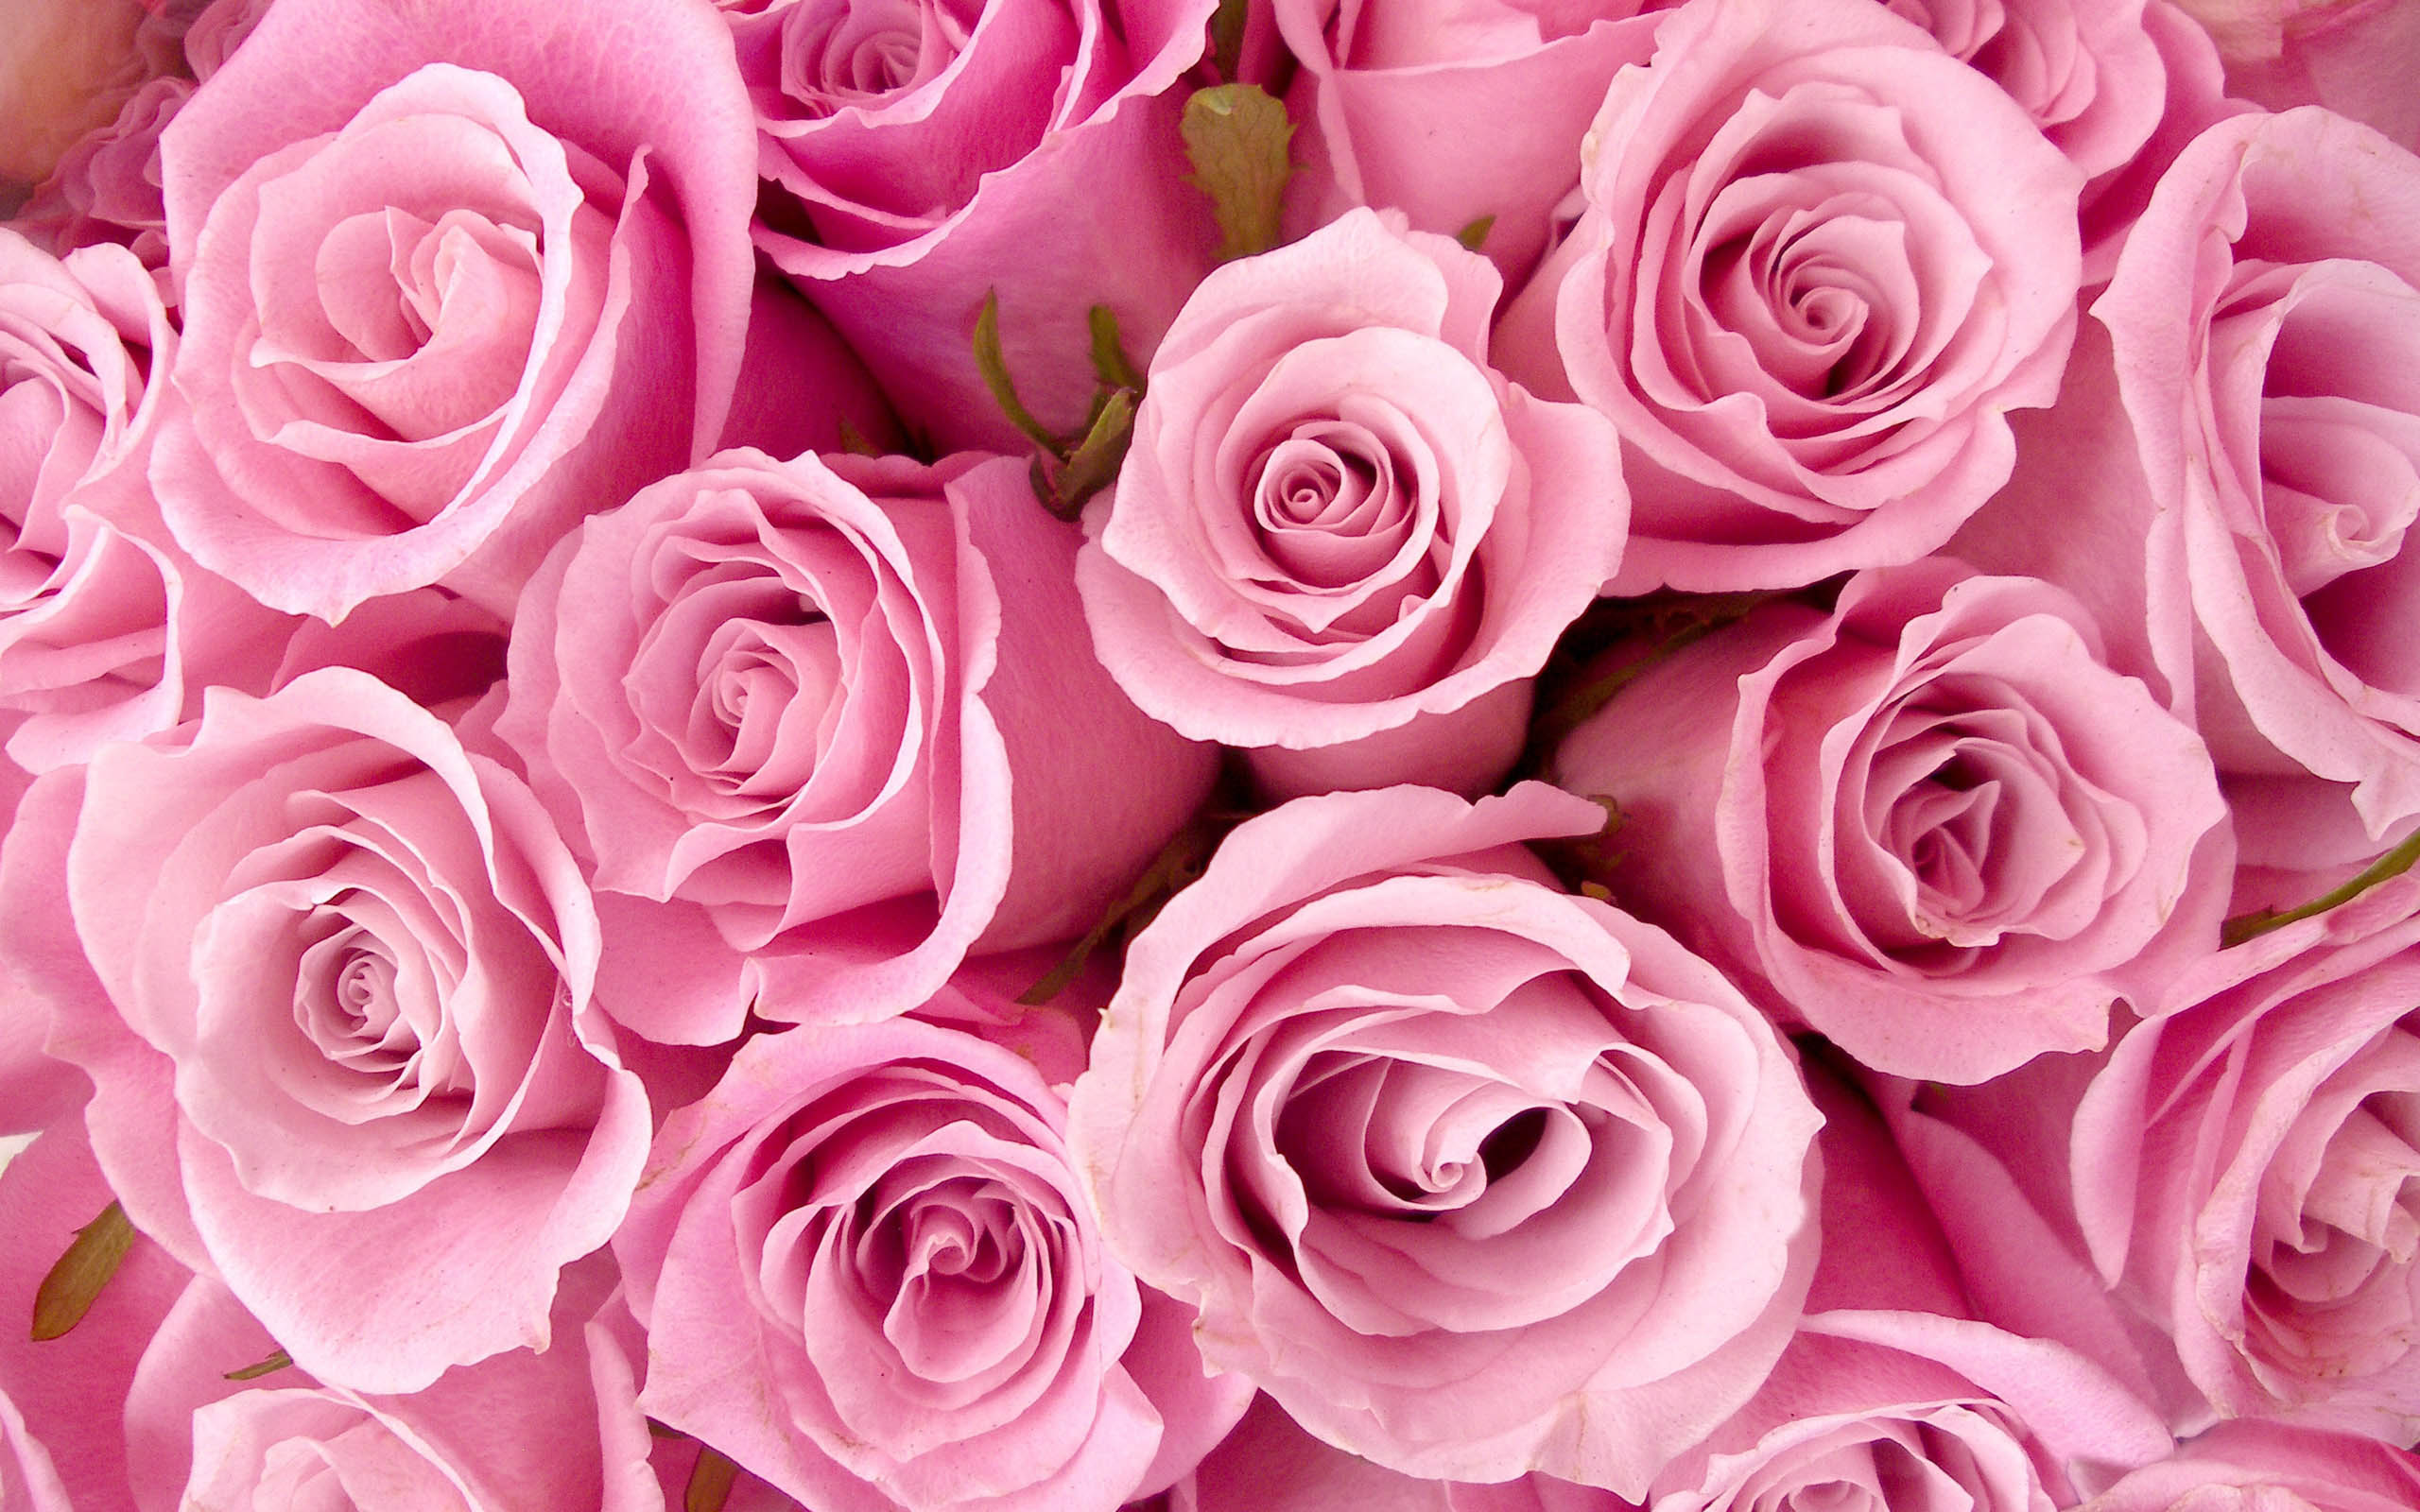 Pink roses wallpaper photos   Pink Wallpaper Designs